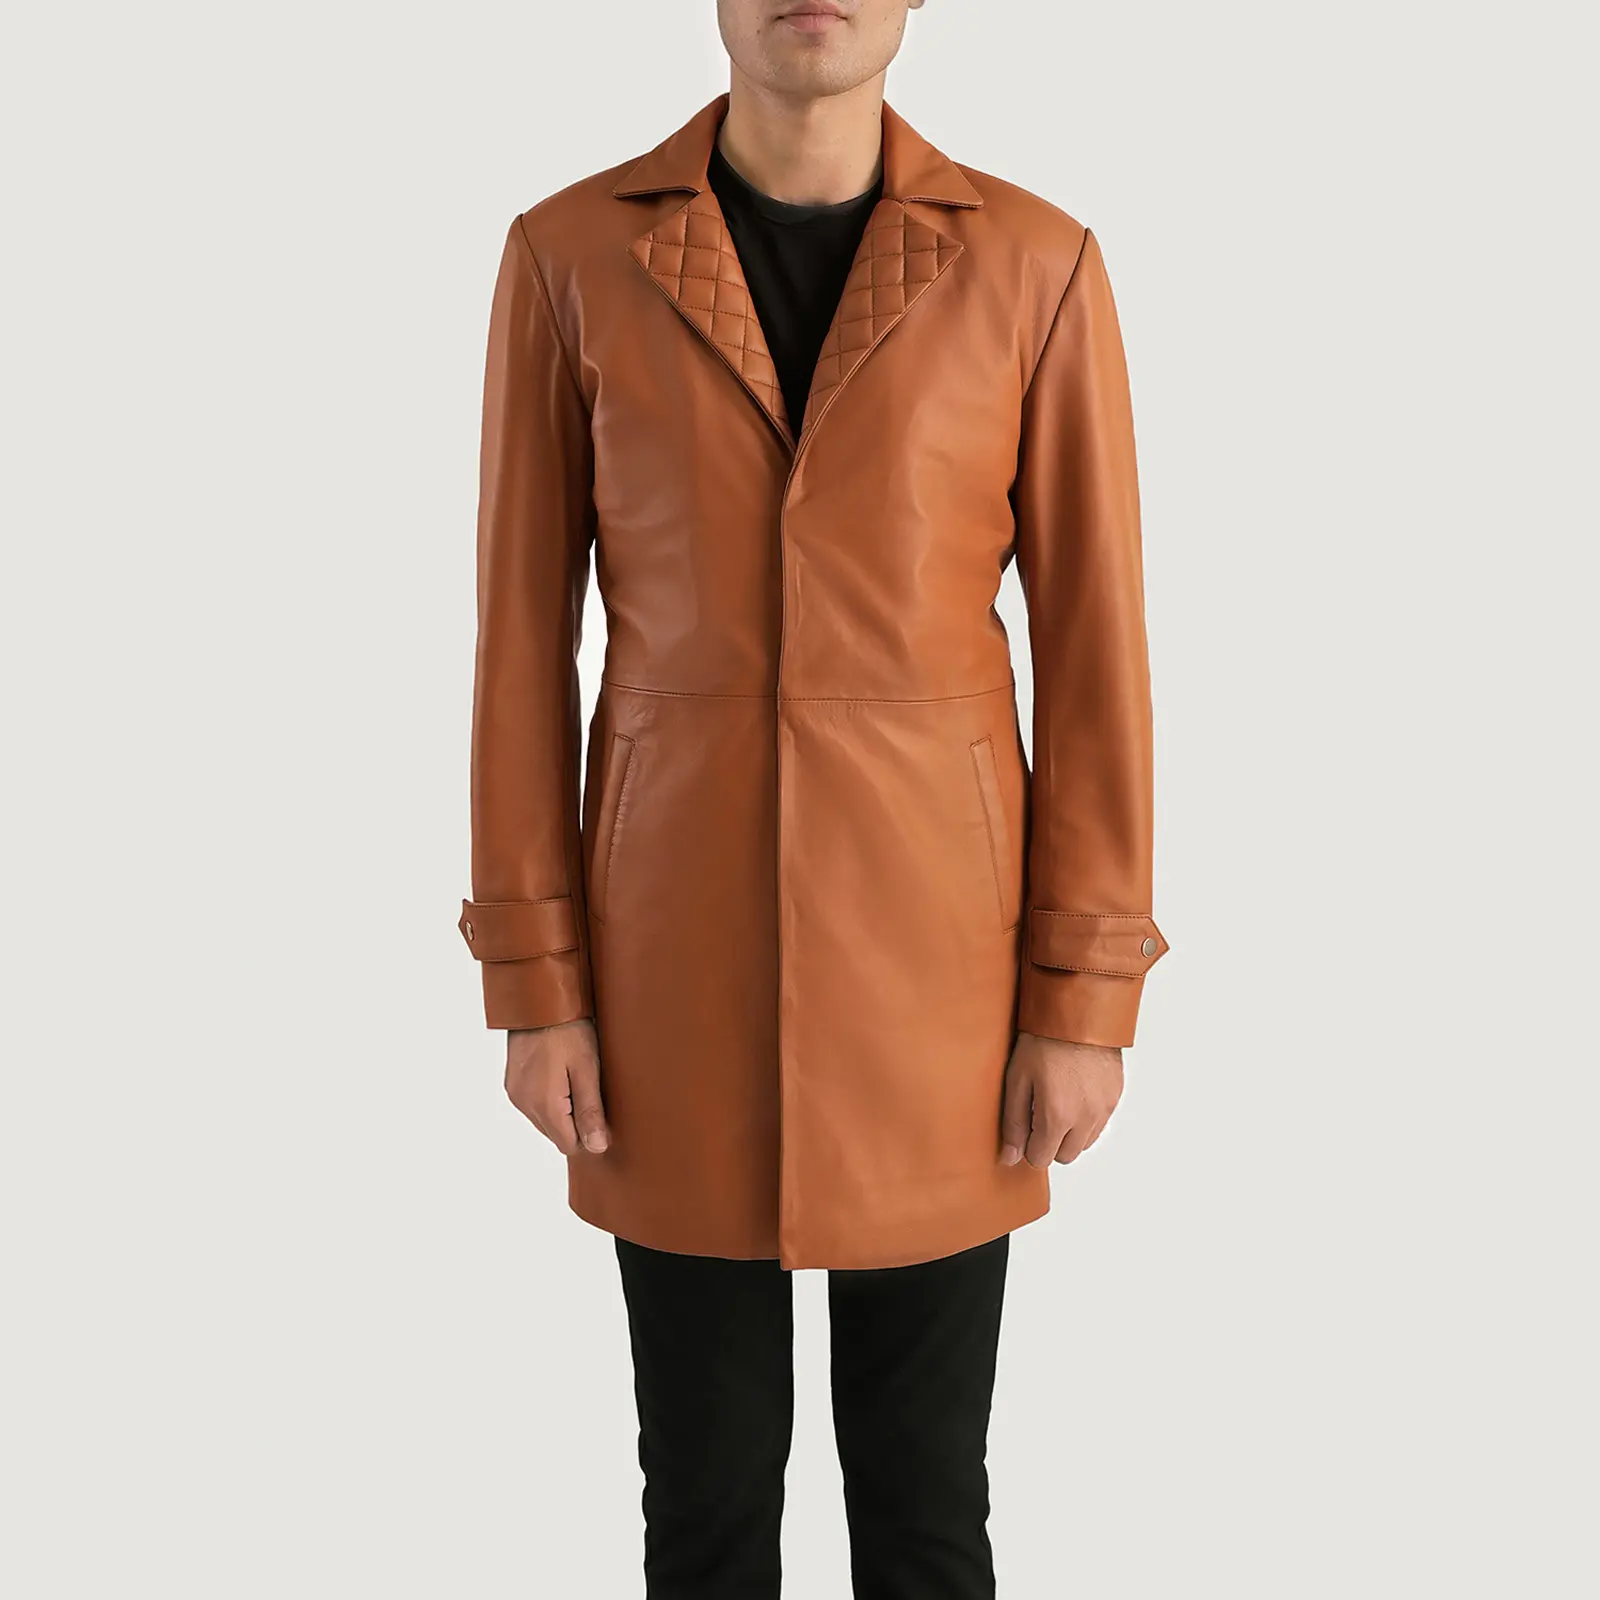 Paling Populer jaket kulit pria kustom jaket Pakistan mantel kulit cokelat kedap untuk pria.